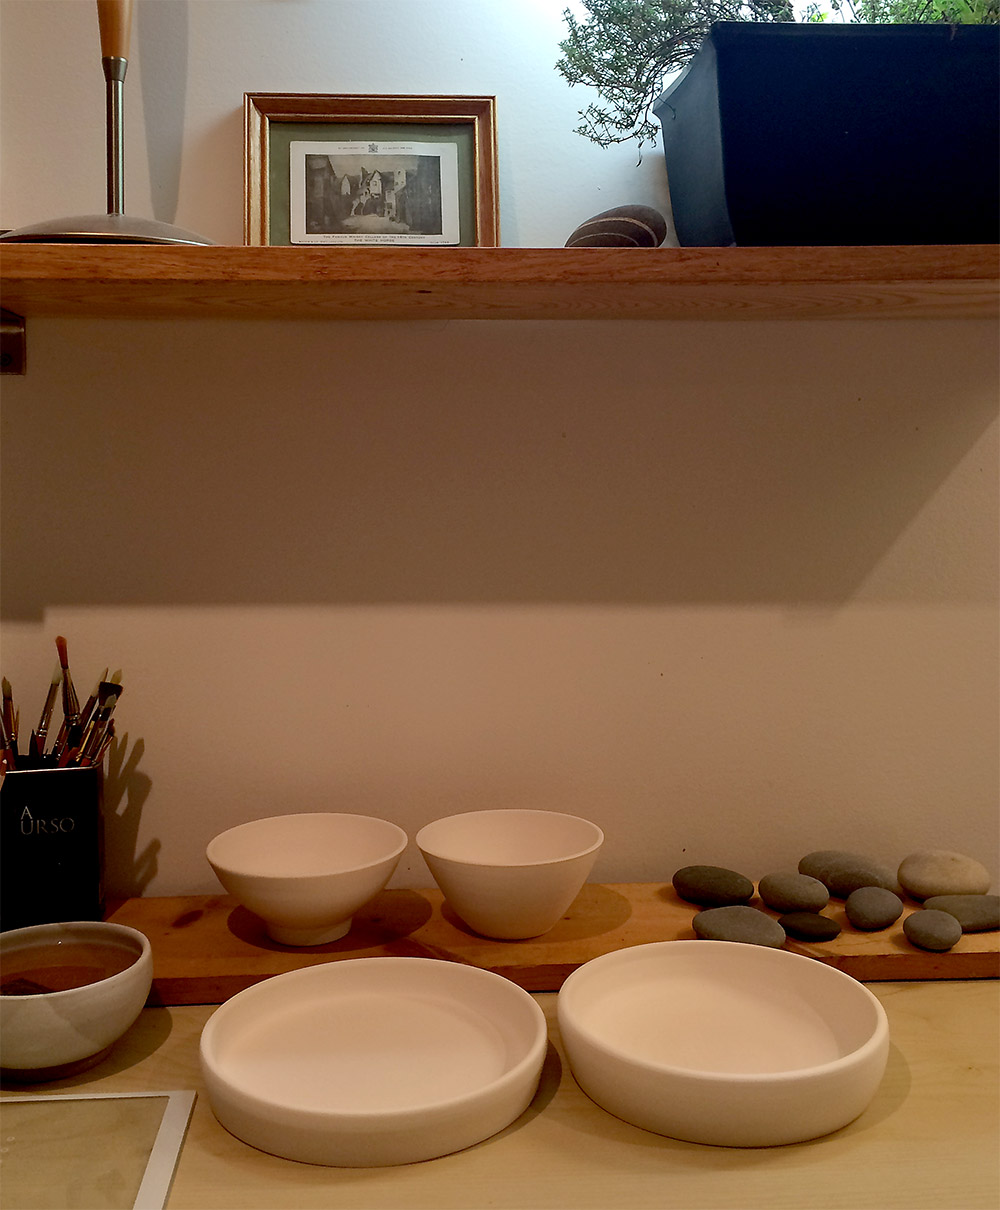 Ceramic plates and bowls